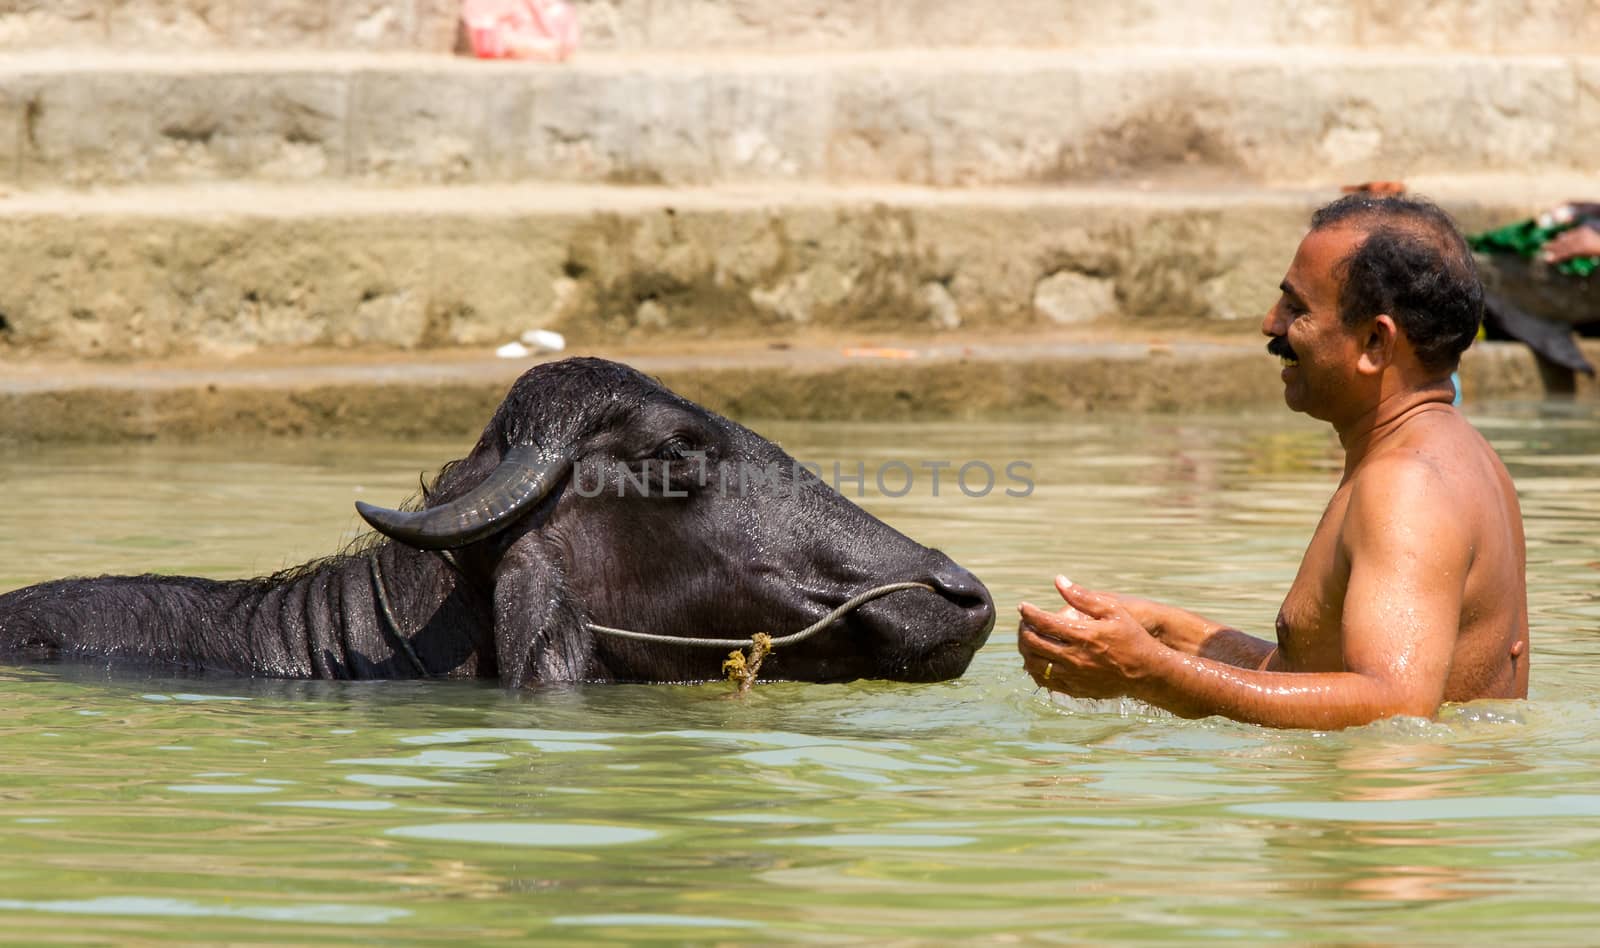 Kerala Backwaters, Idia - January 21, 2012: The man with a bull in a Kerala backwaters pond in Kerala, India.